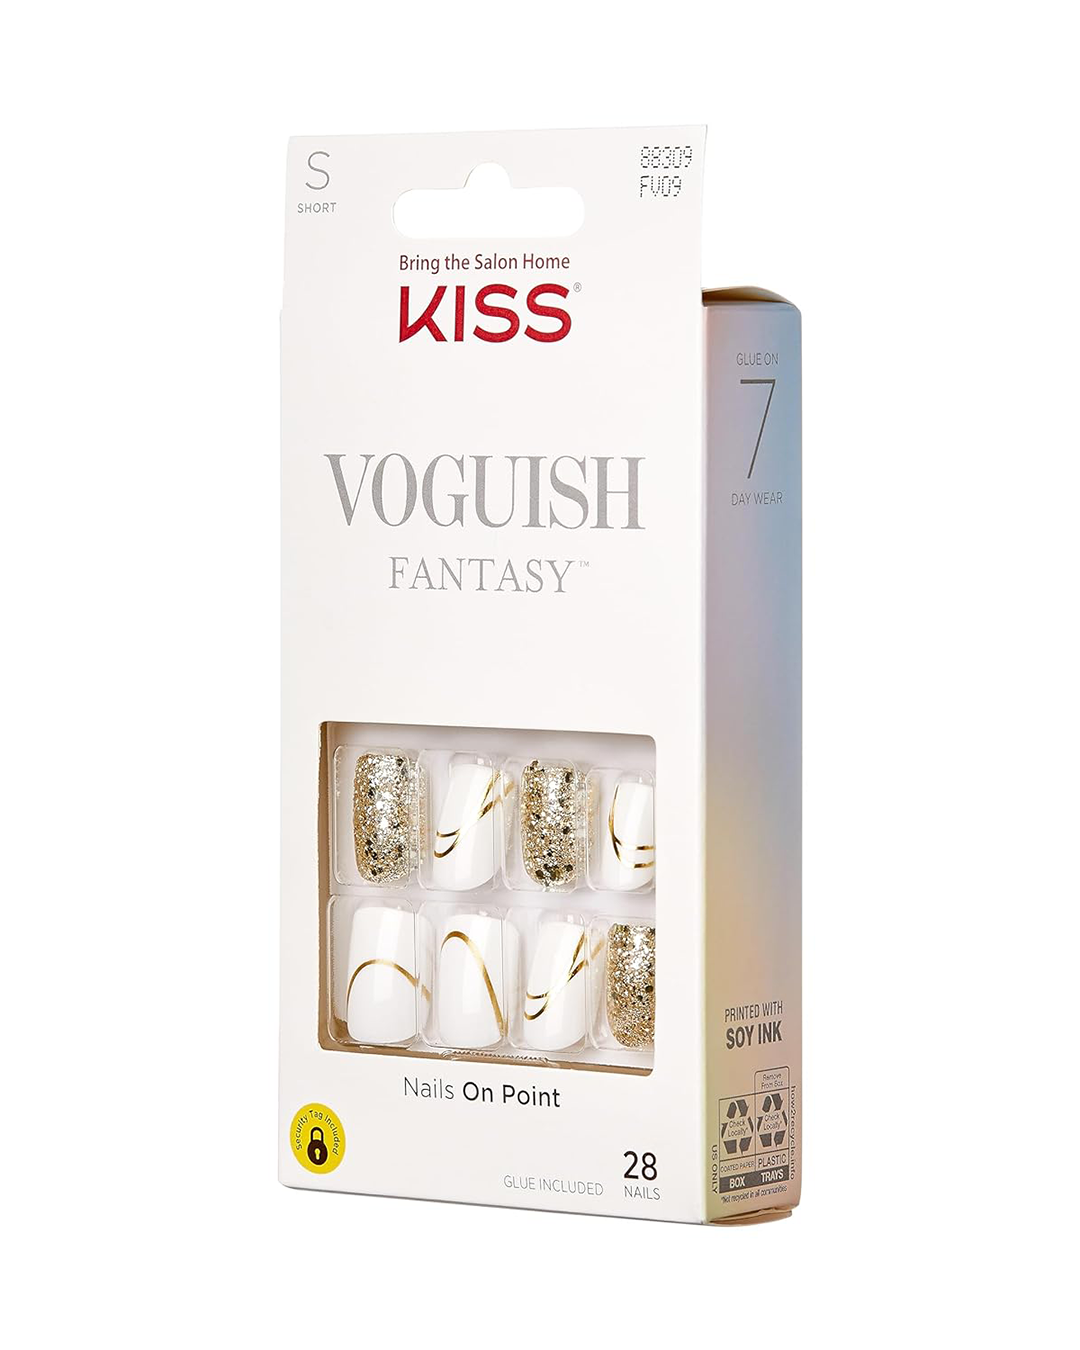 Kiss Voguish Fantasy (FV09)